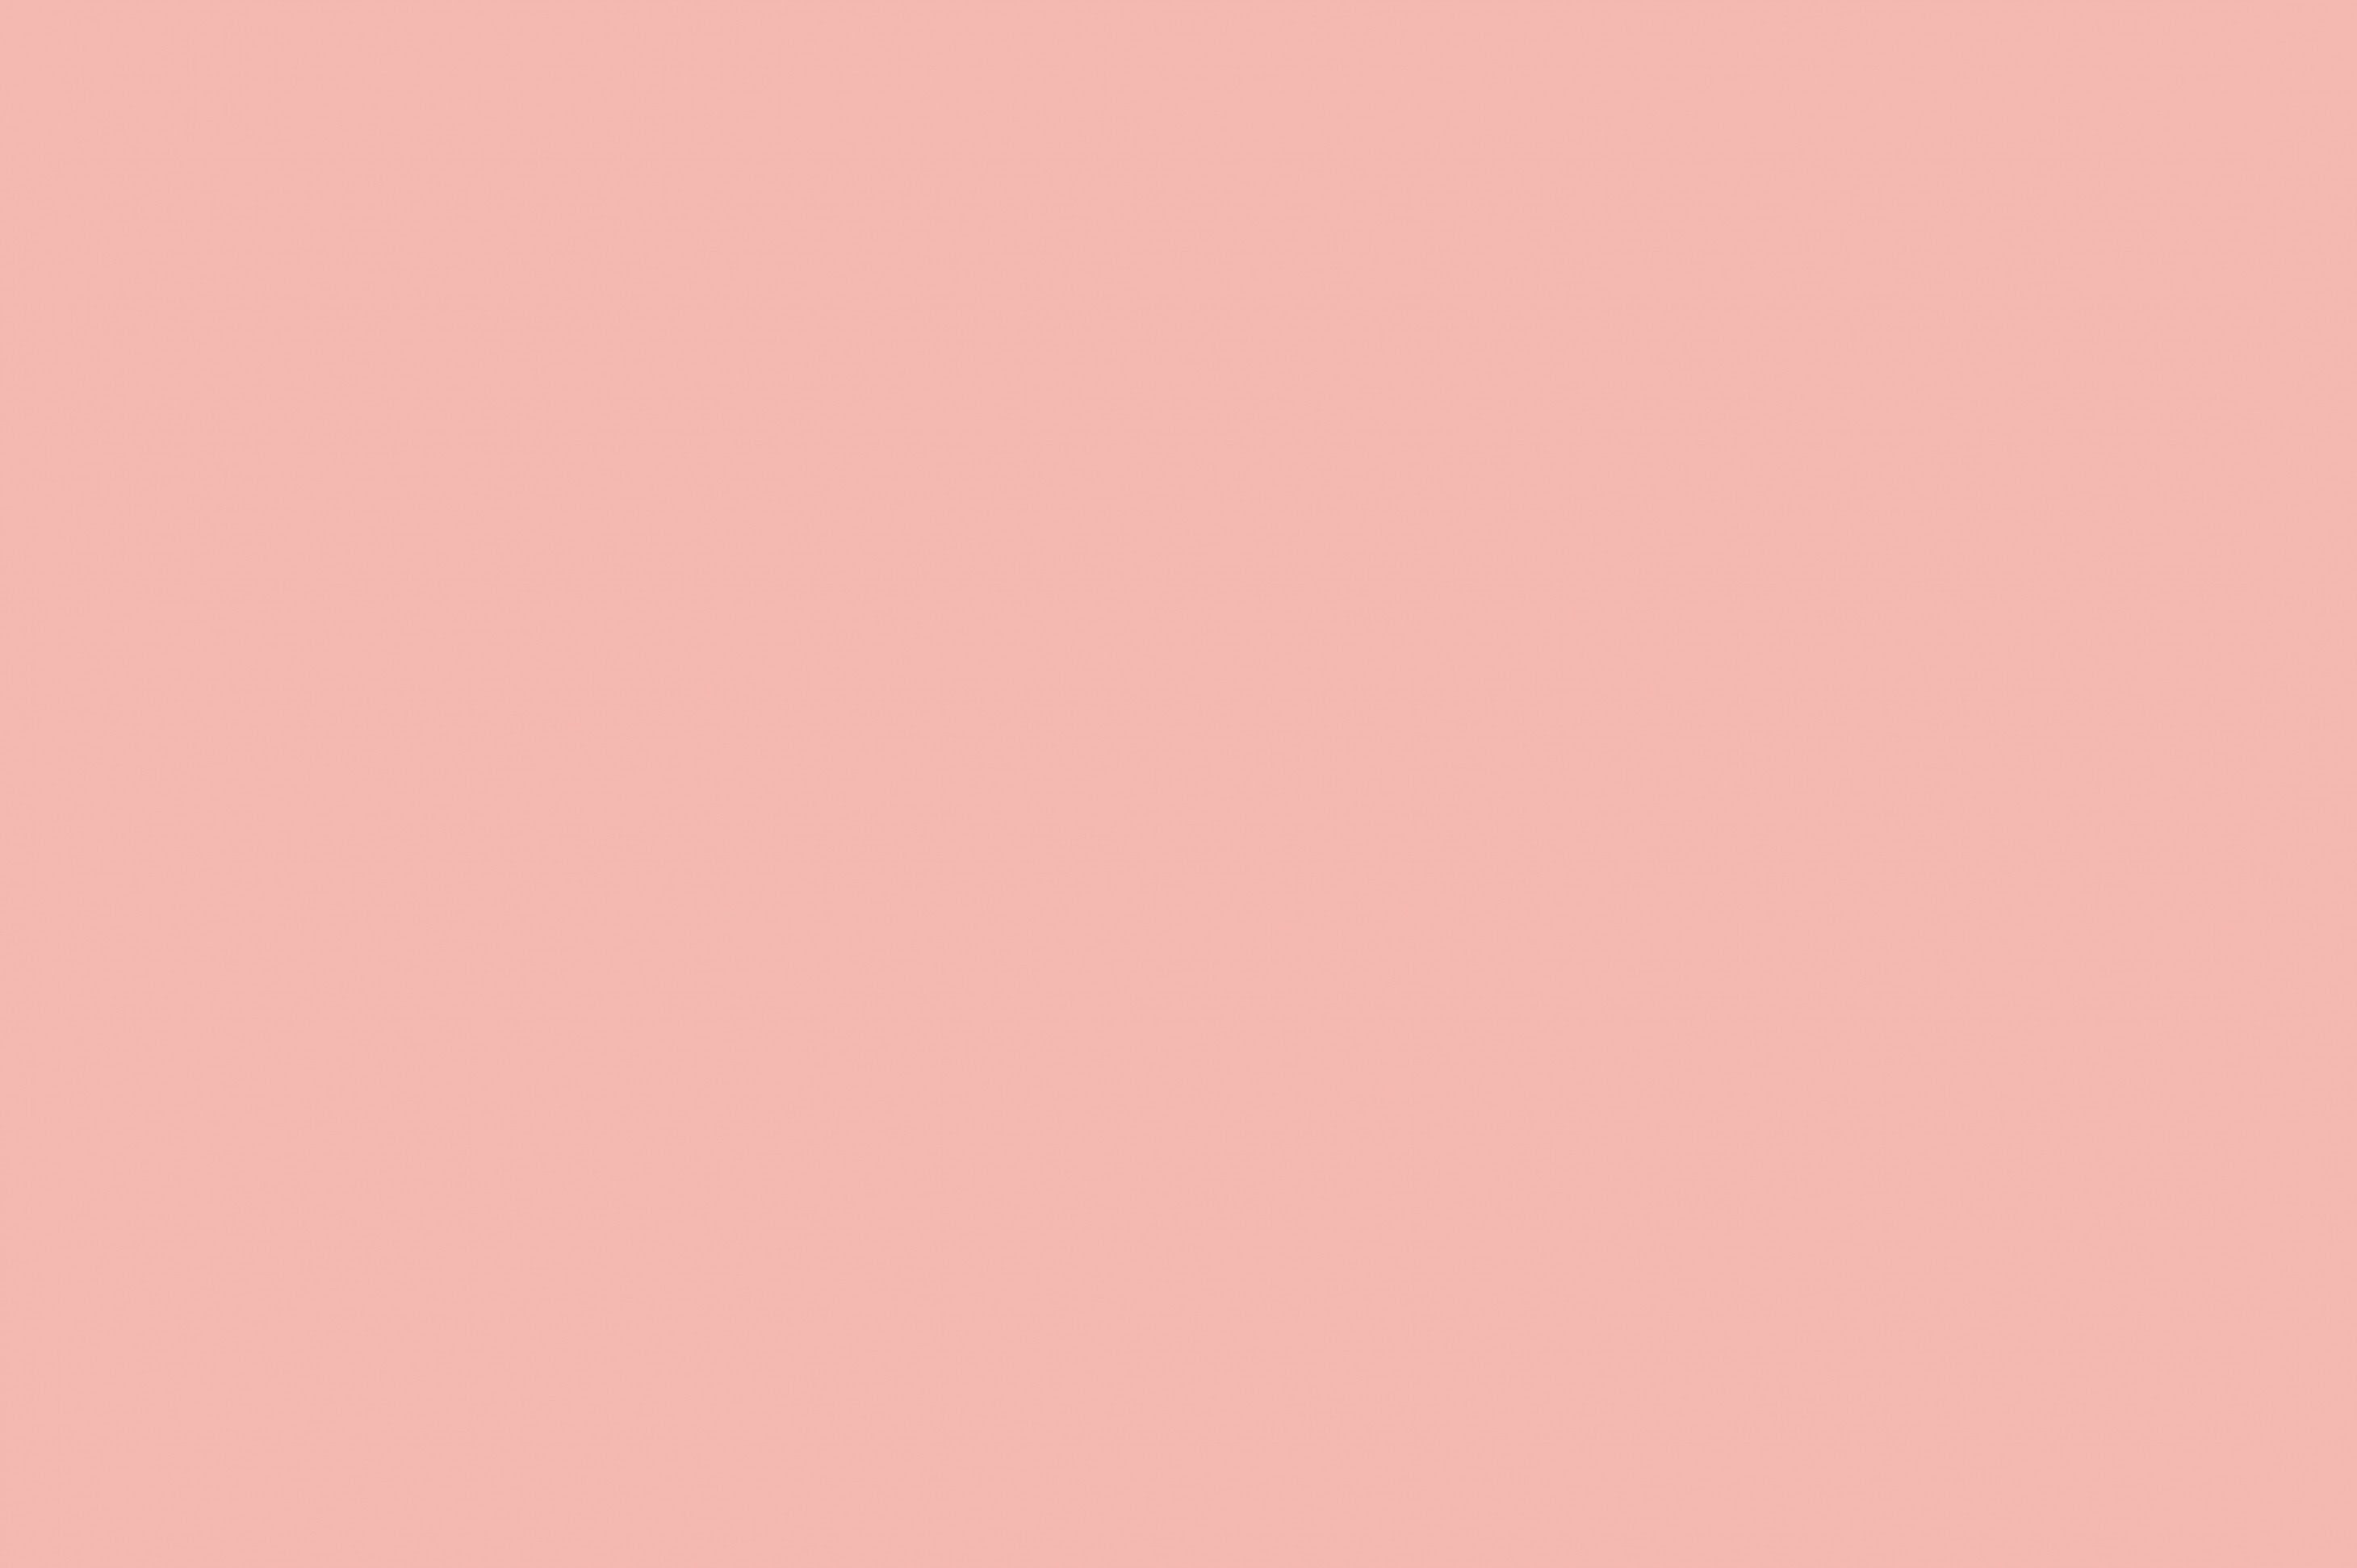 Dusty Pink Aesthetic Pink Background Tumblr - Images | Slike